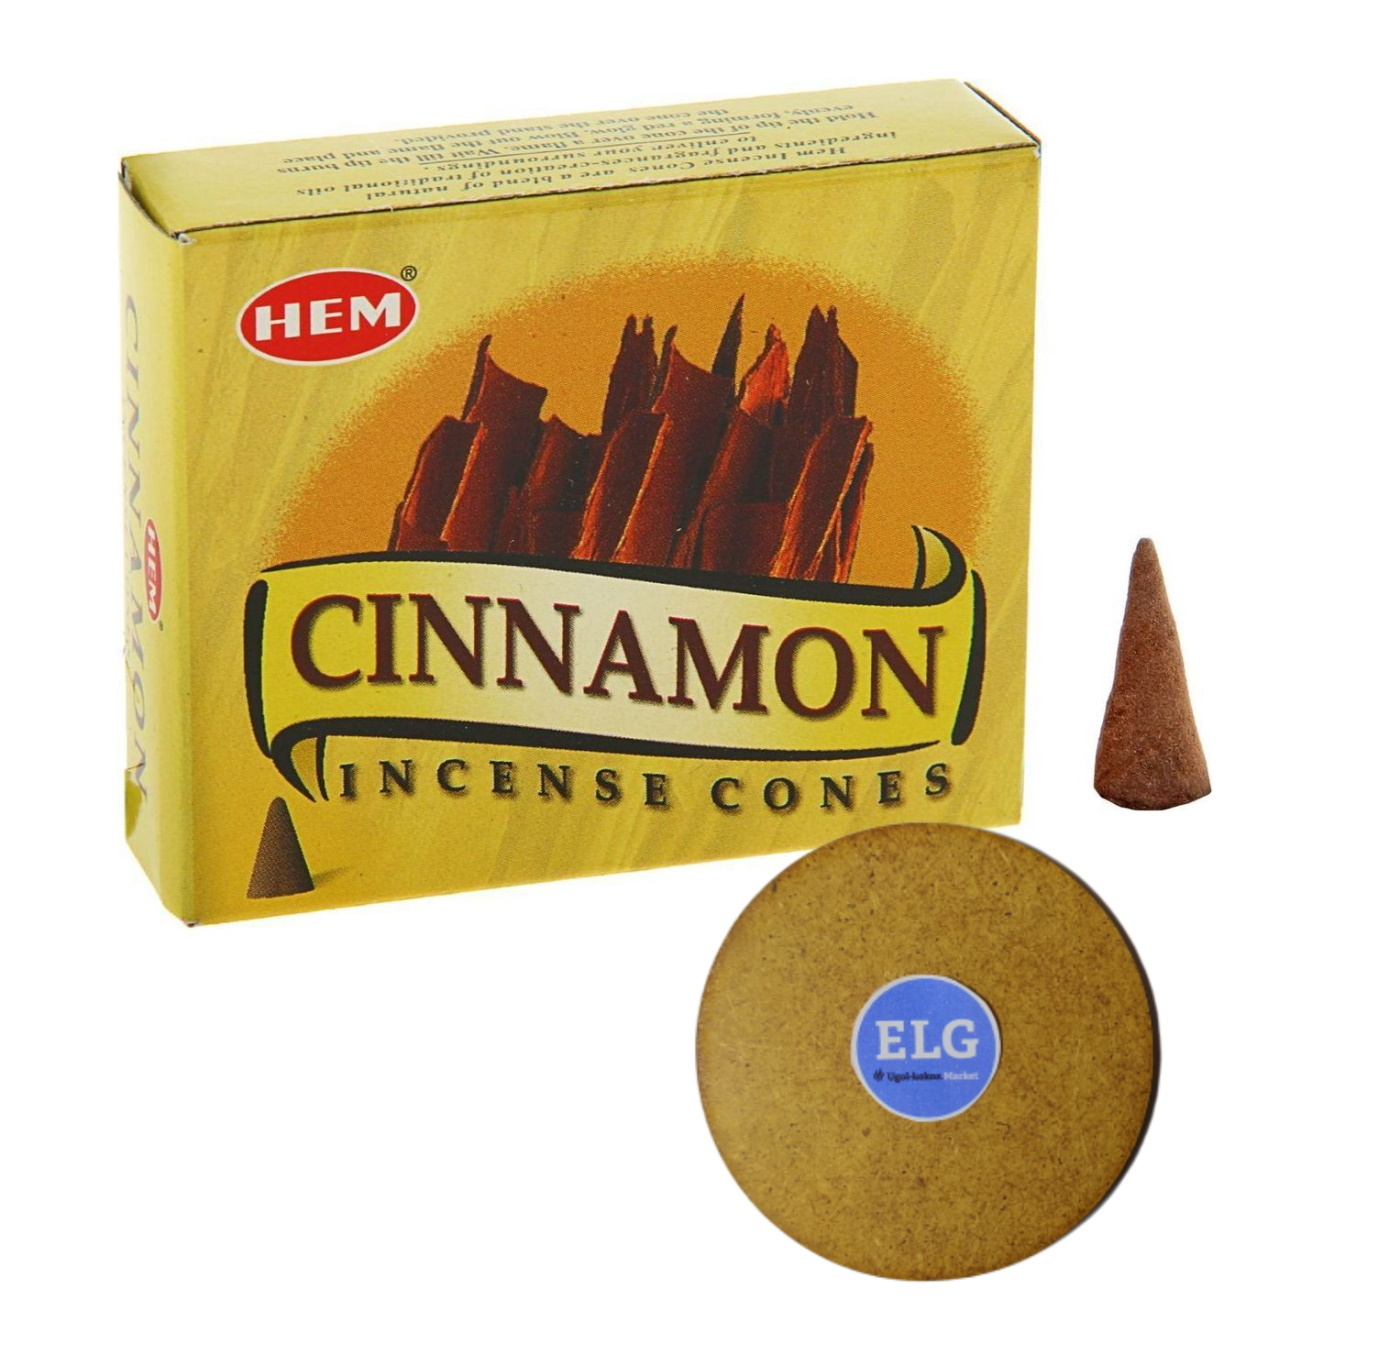 фото Благовония hem конусы корица (cinnamon) упаковка 10 конусов + подставка elg